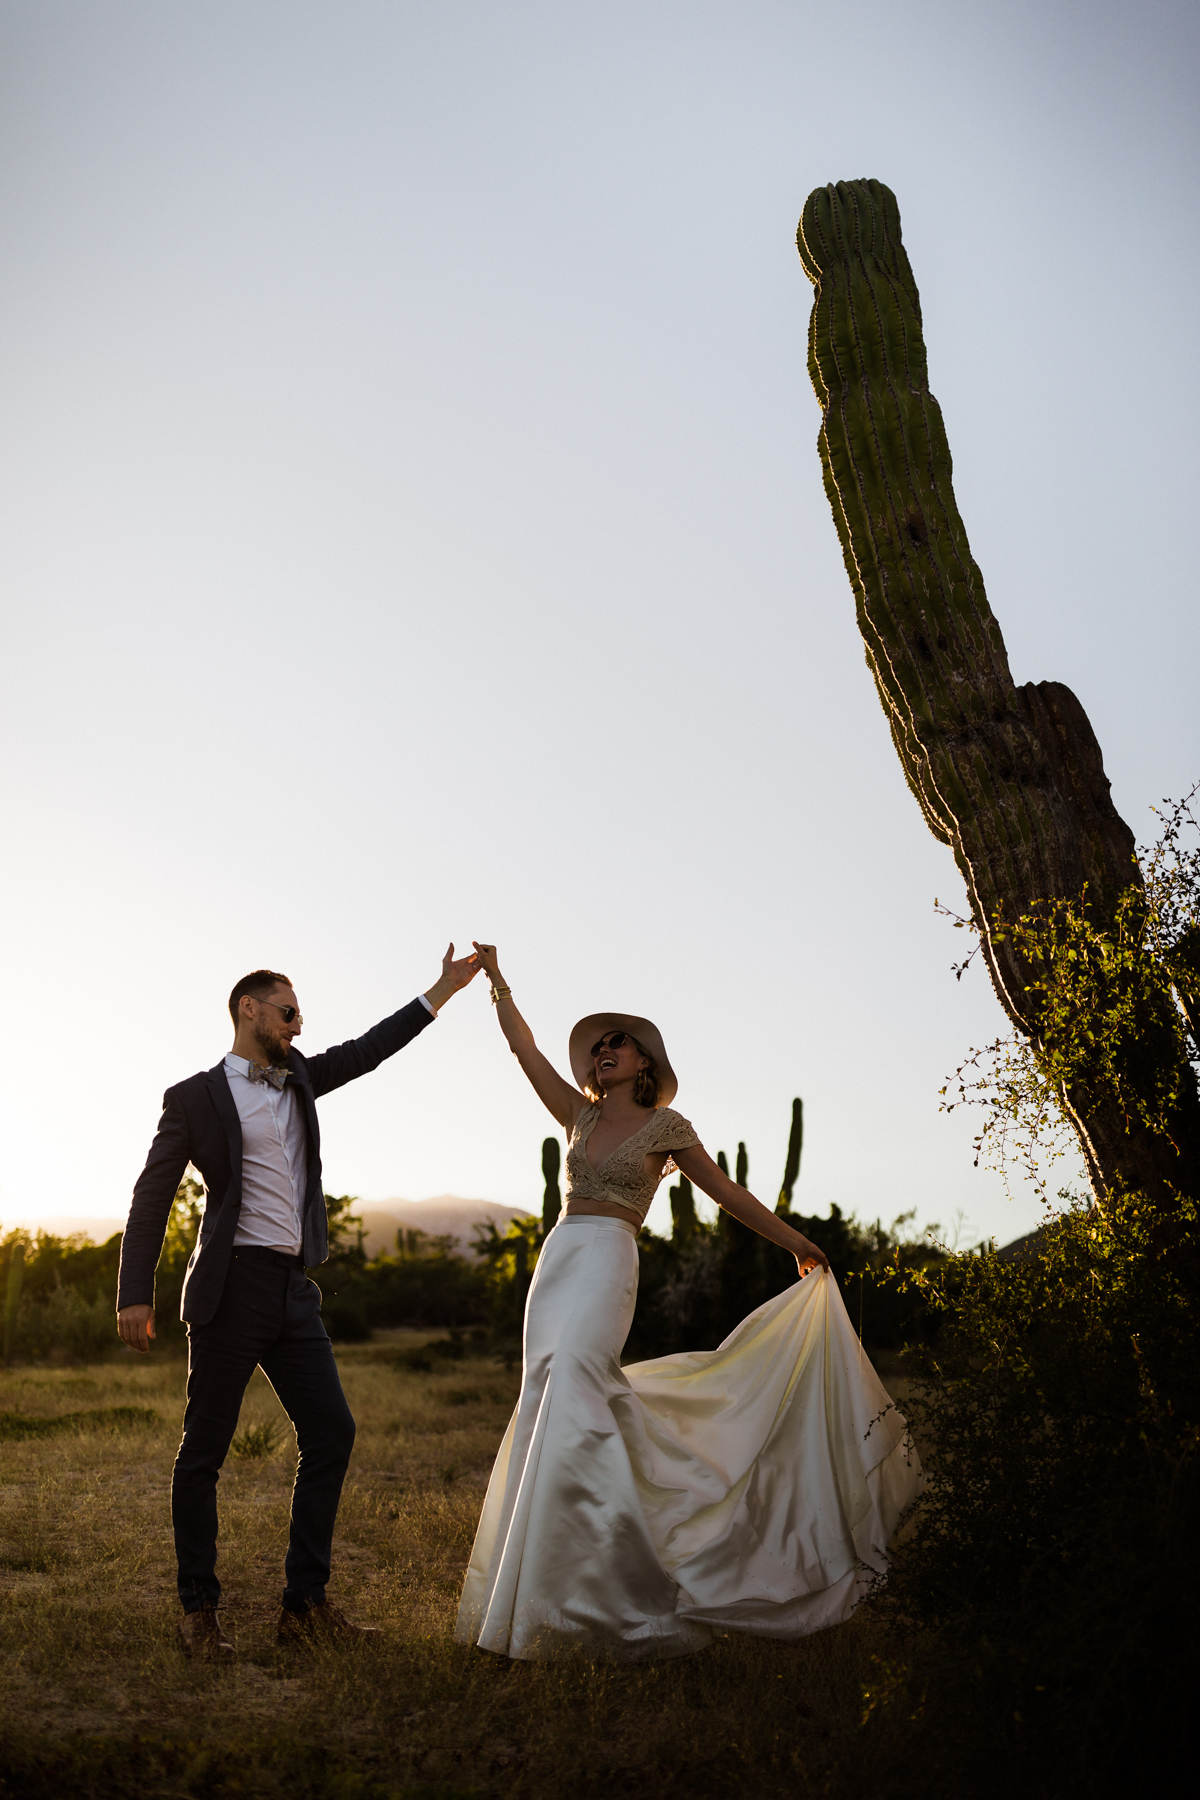 Cabo wedding photographers for a La Ventana Destination Elopement - Image 54